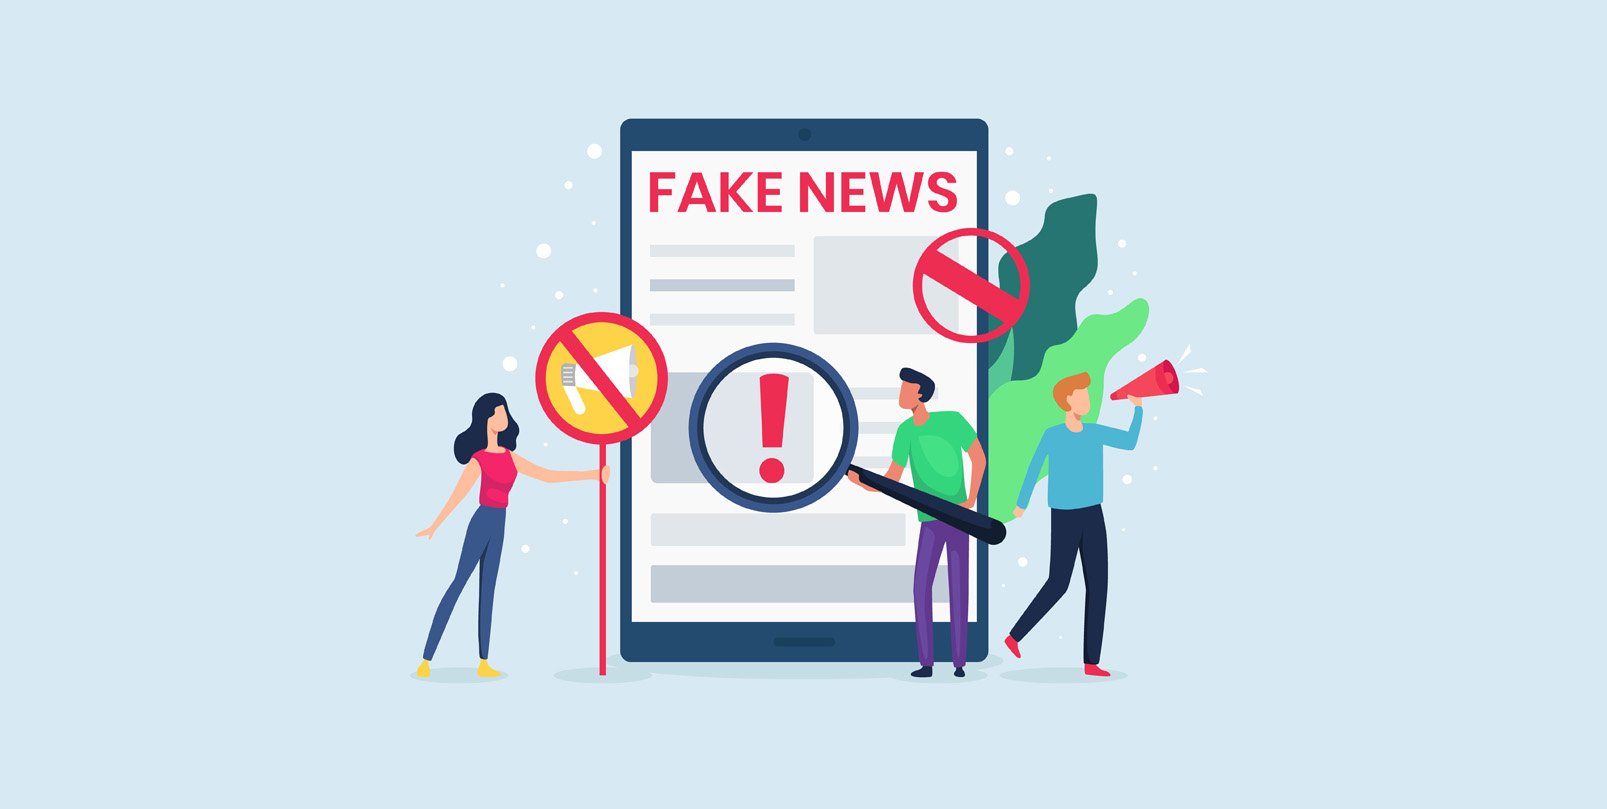 Fake News and Disinformation Spread via Social Media